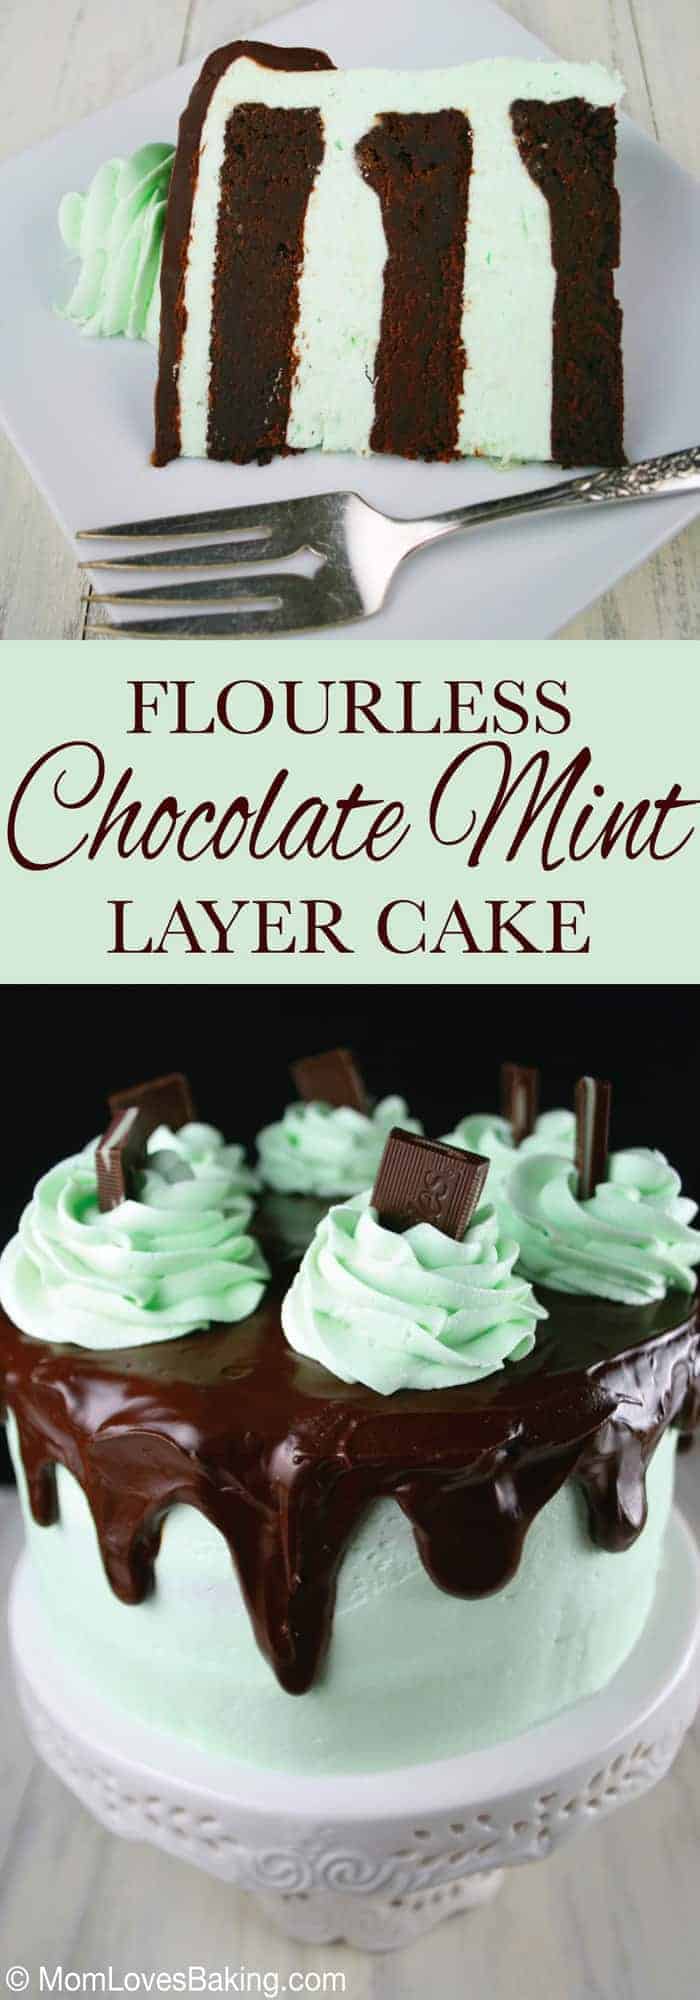 Flourless Chocolate Mint Layer Cake